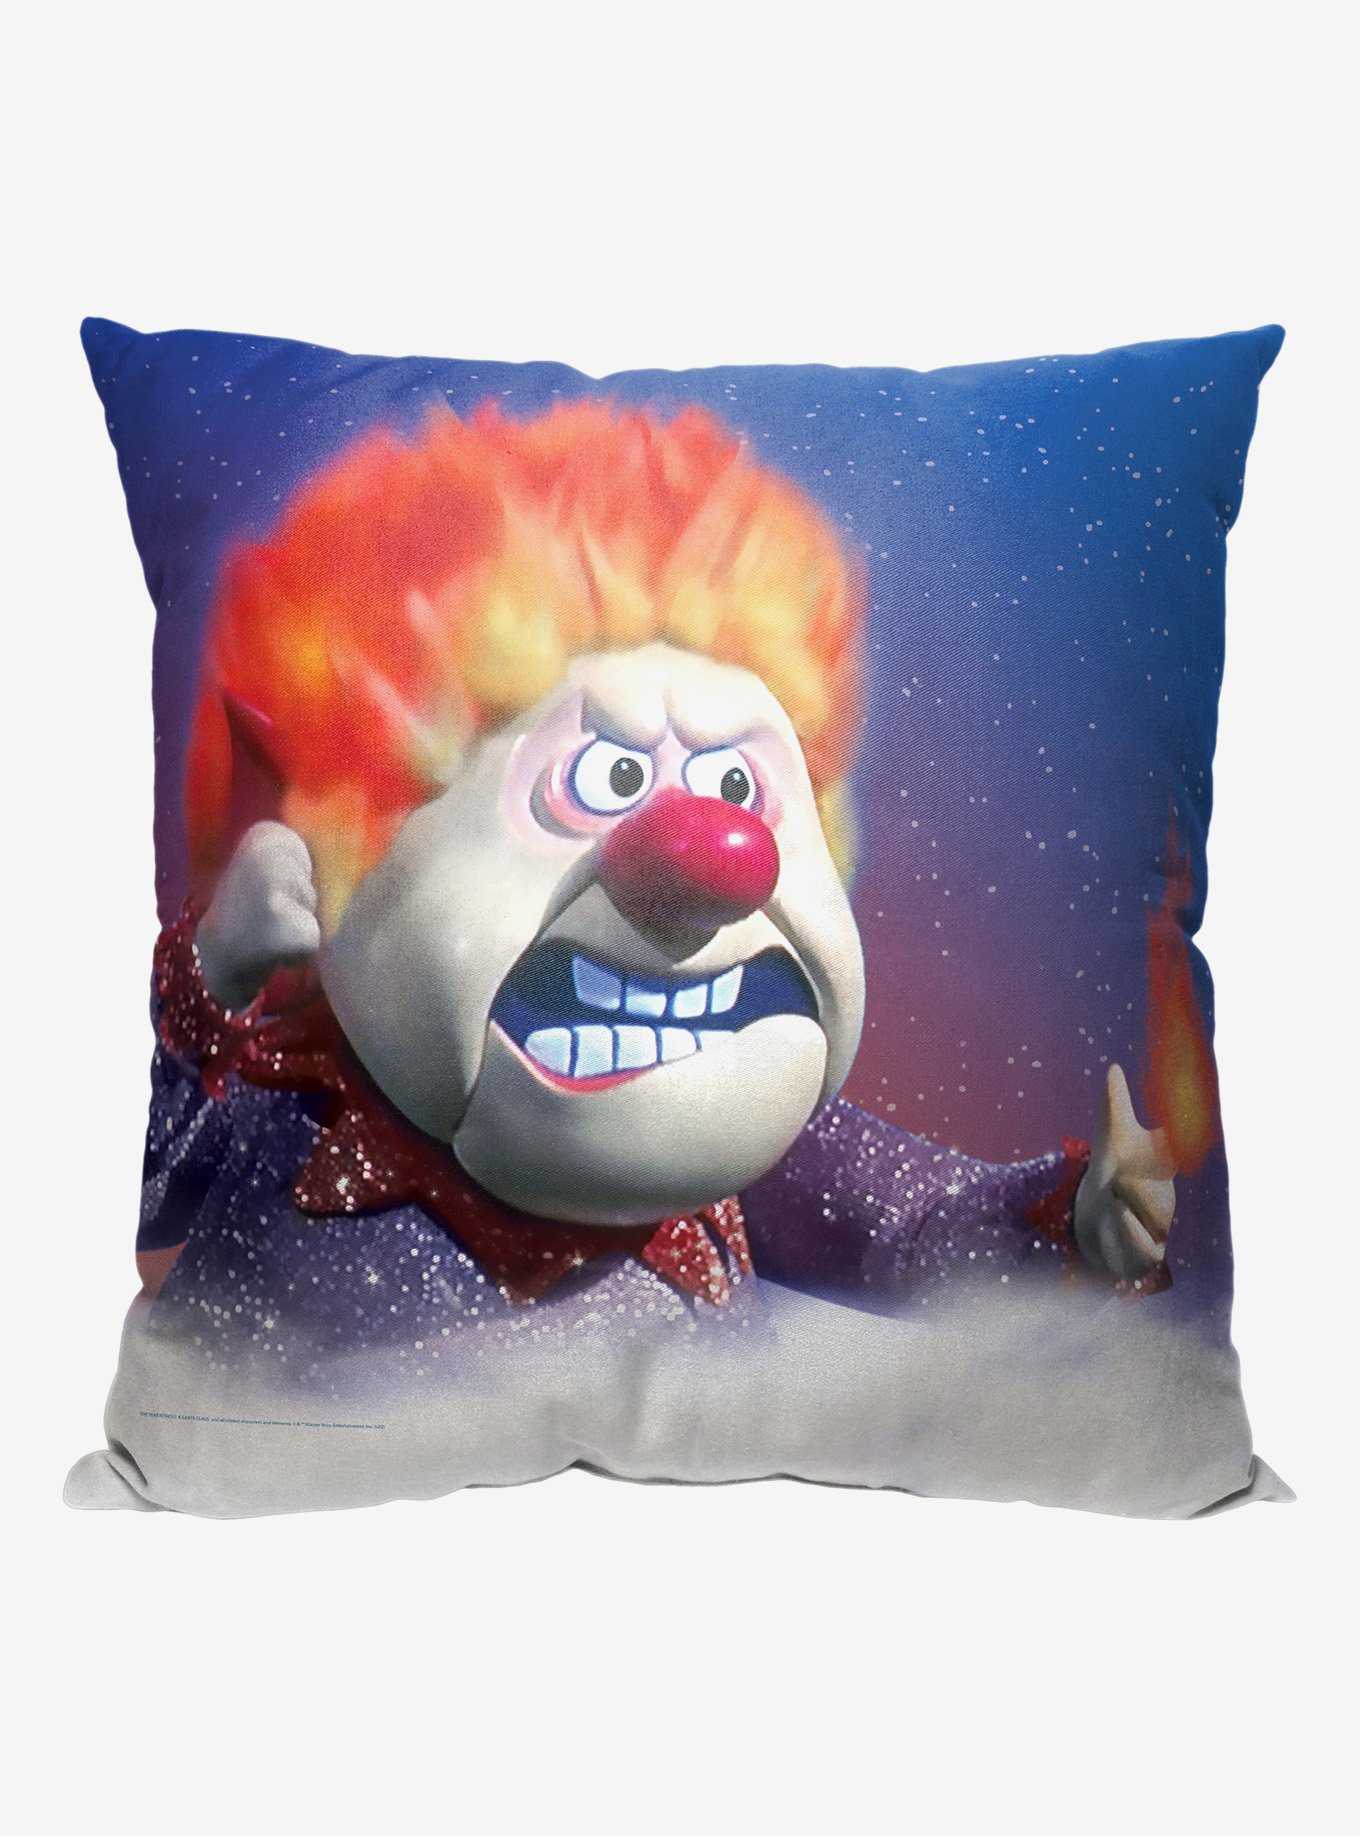 Year Without A Santa Claus Flaming Hot Head Printed Throw Pillow, , hi-res